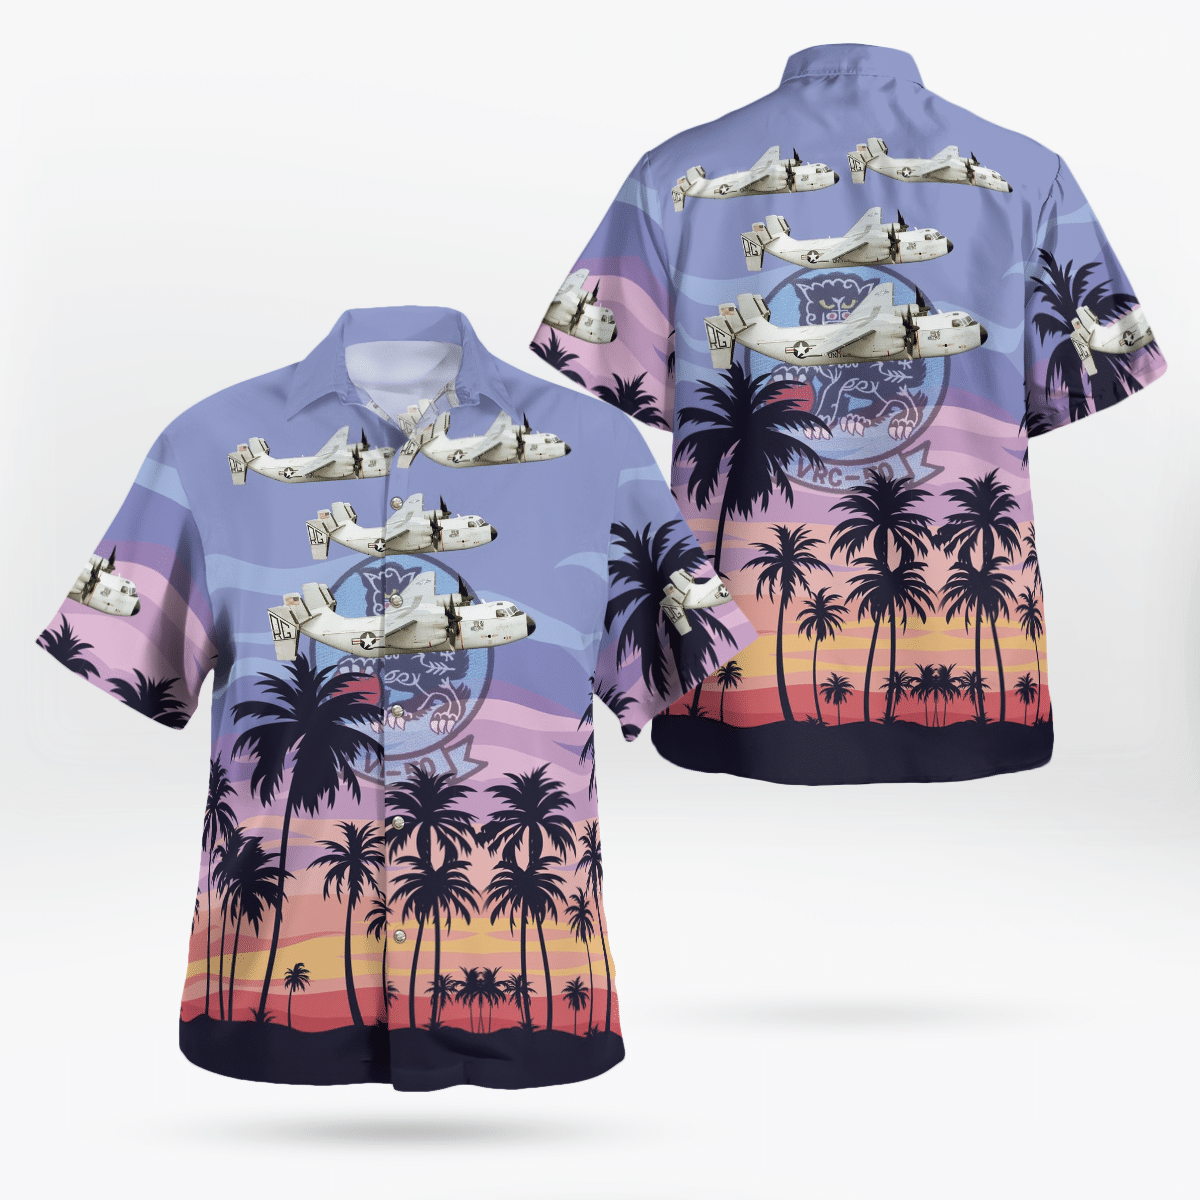 Why don't you order Hot Hawaiian Shirt today? 349